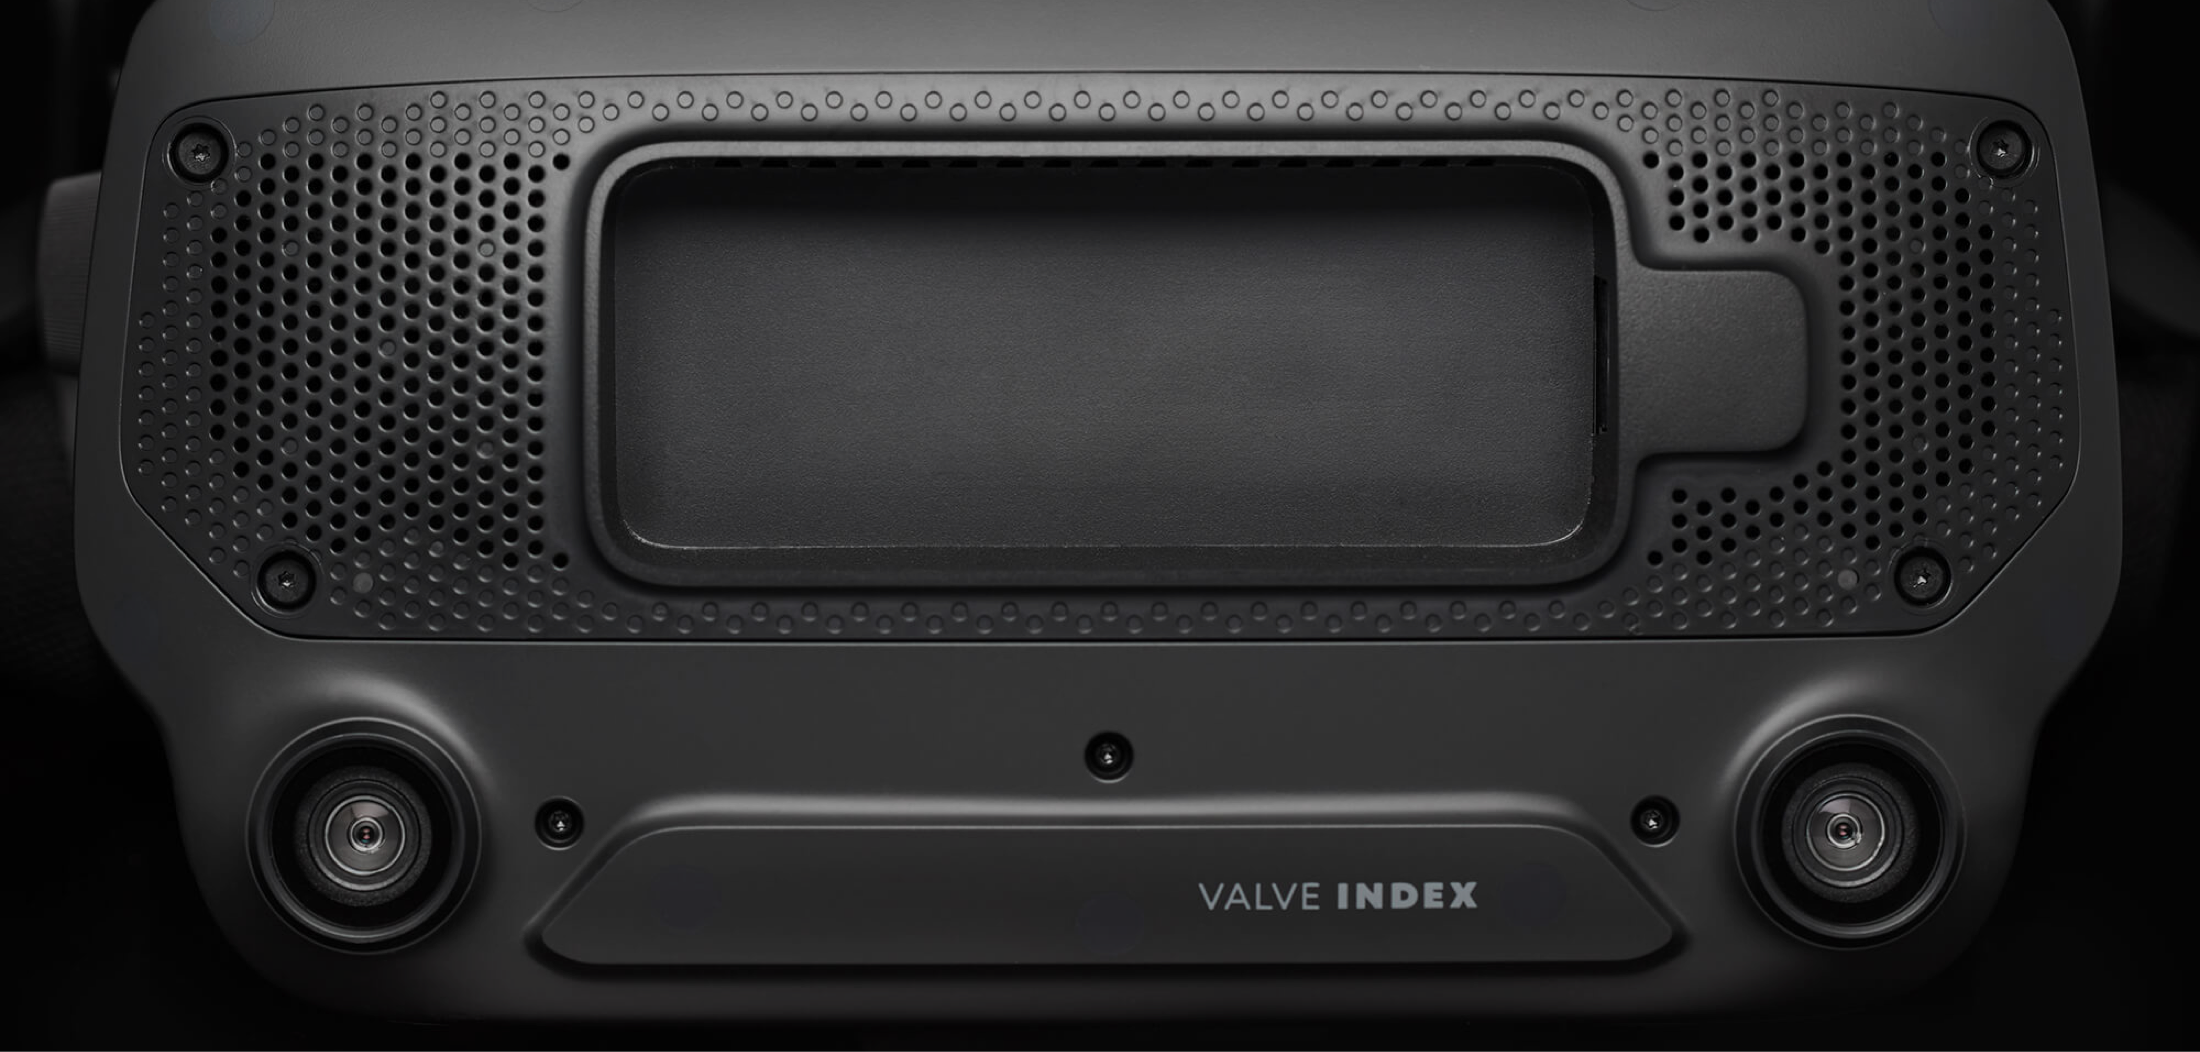 Steam vr 301. ВР шлем Valve Index. Valve Index VR Kit. Шлем виртуальной реальности Valve Index VR Kit. Valve Index VR контроллеры.